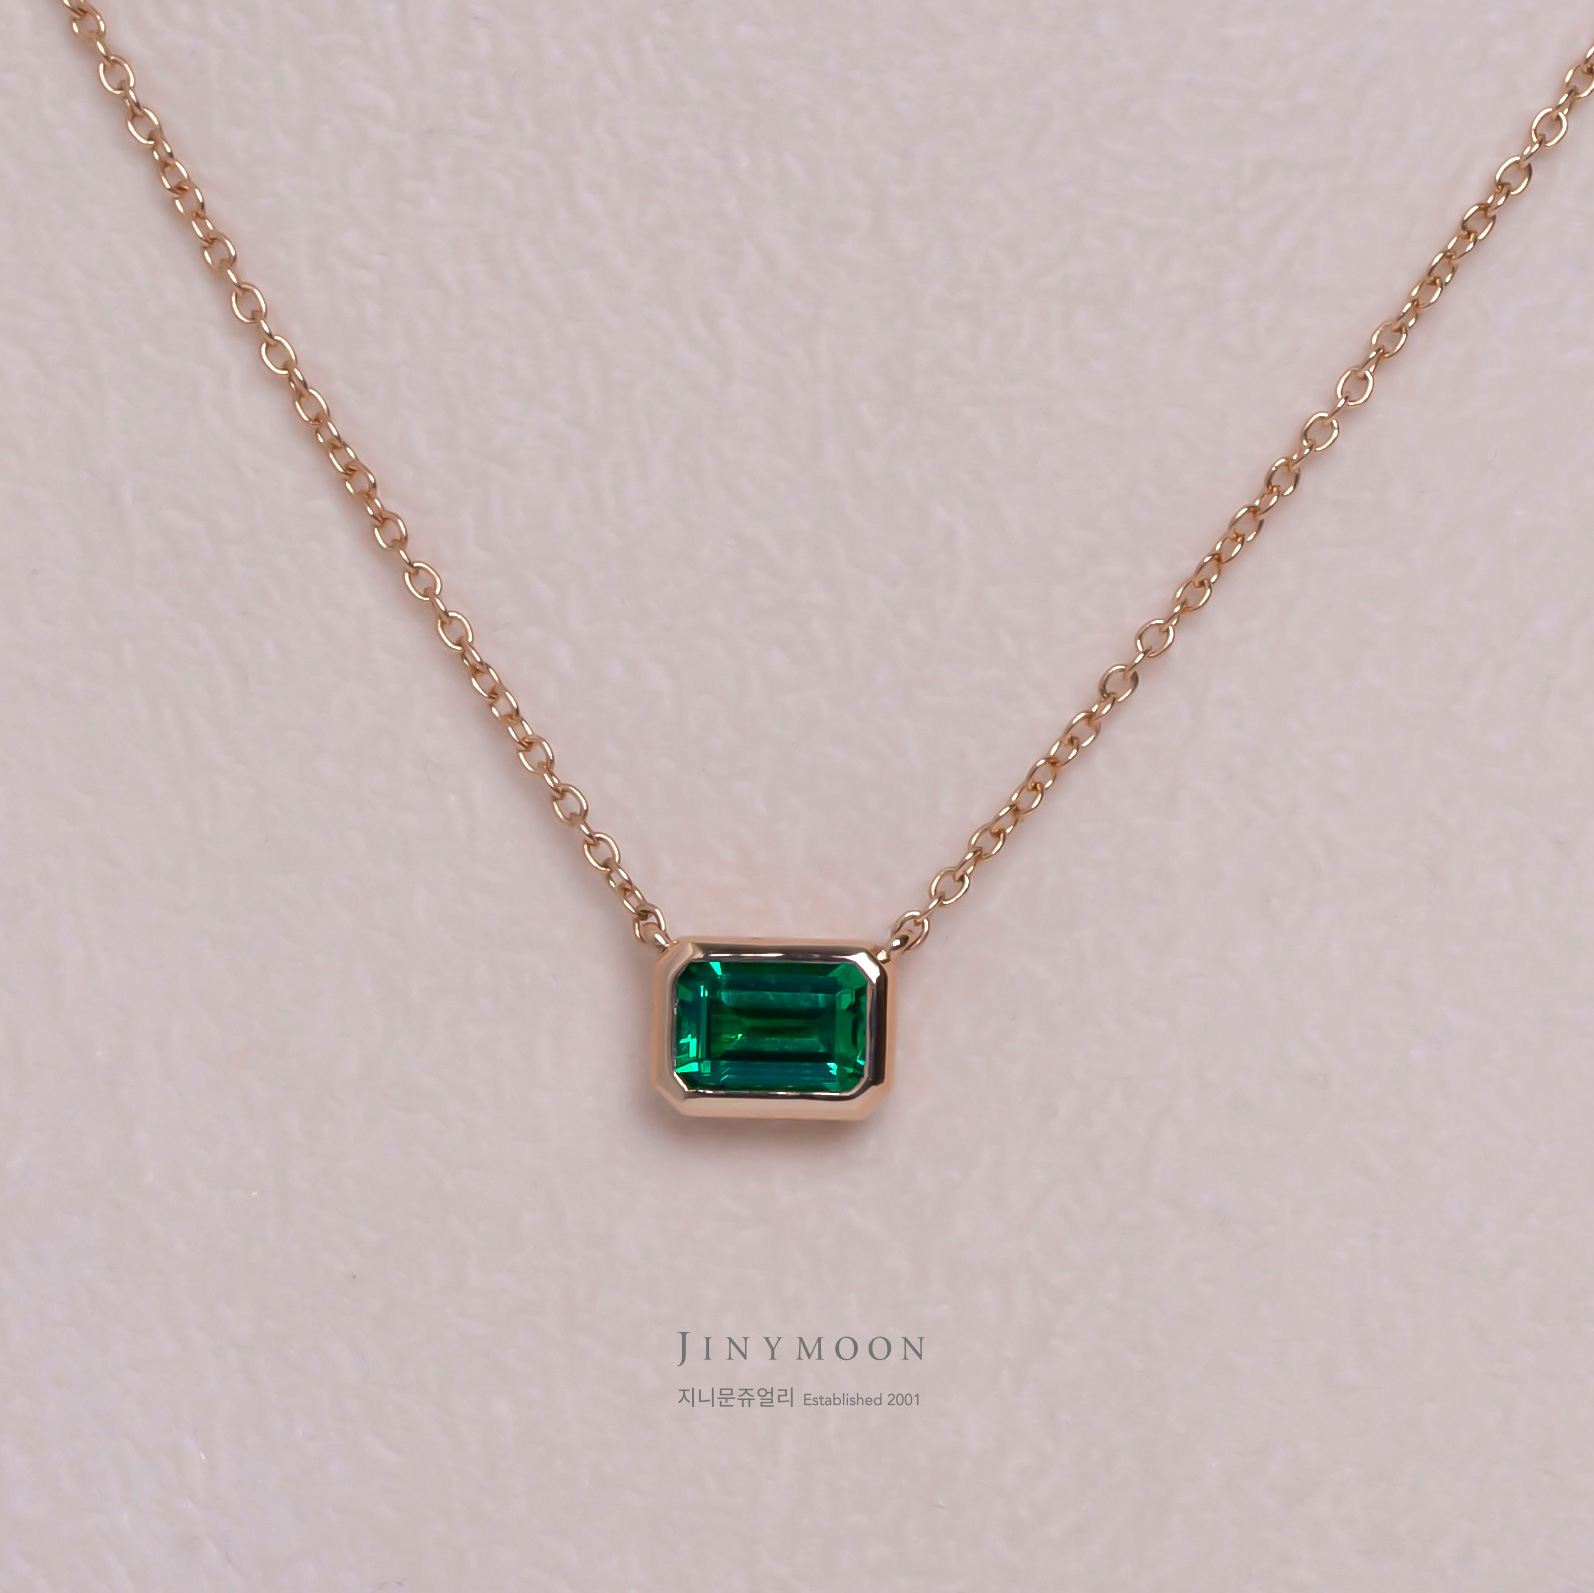 N071. 초록빛의 에멜 목걸이, 18K 로즈골드, 지니문 디자인